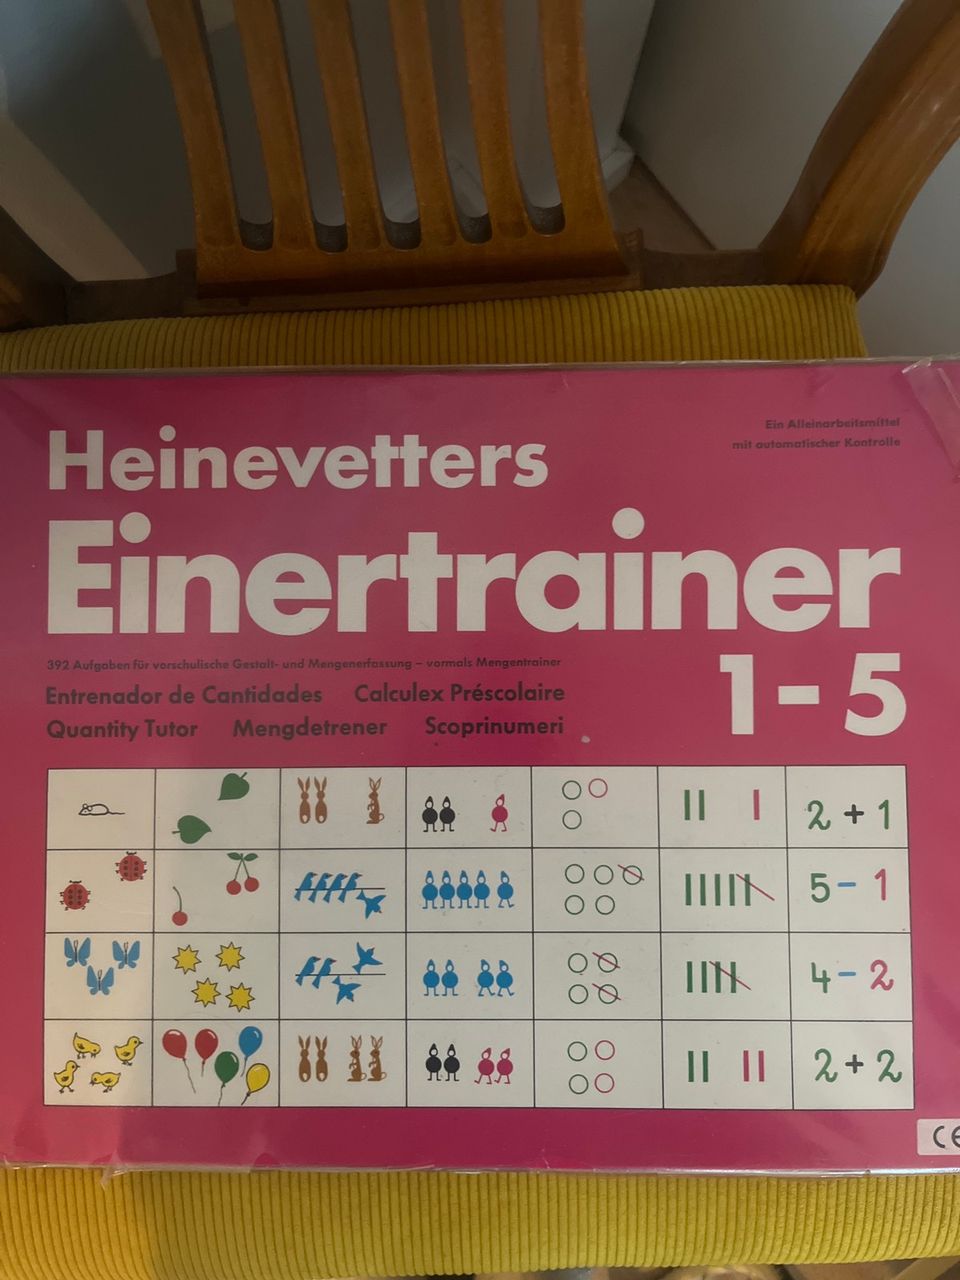 Heinevetters Einertrainer 1-5 lapsille suunnattu oppimispeli